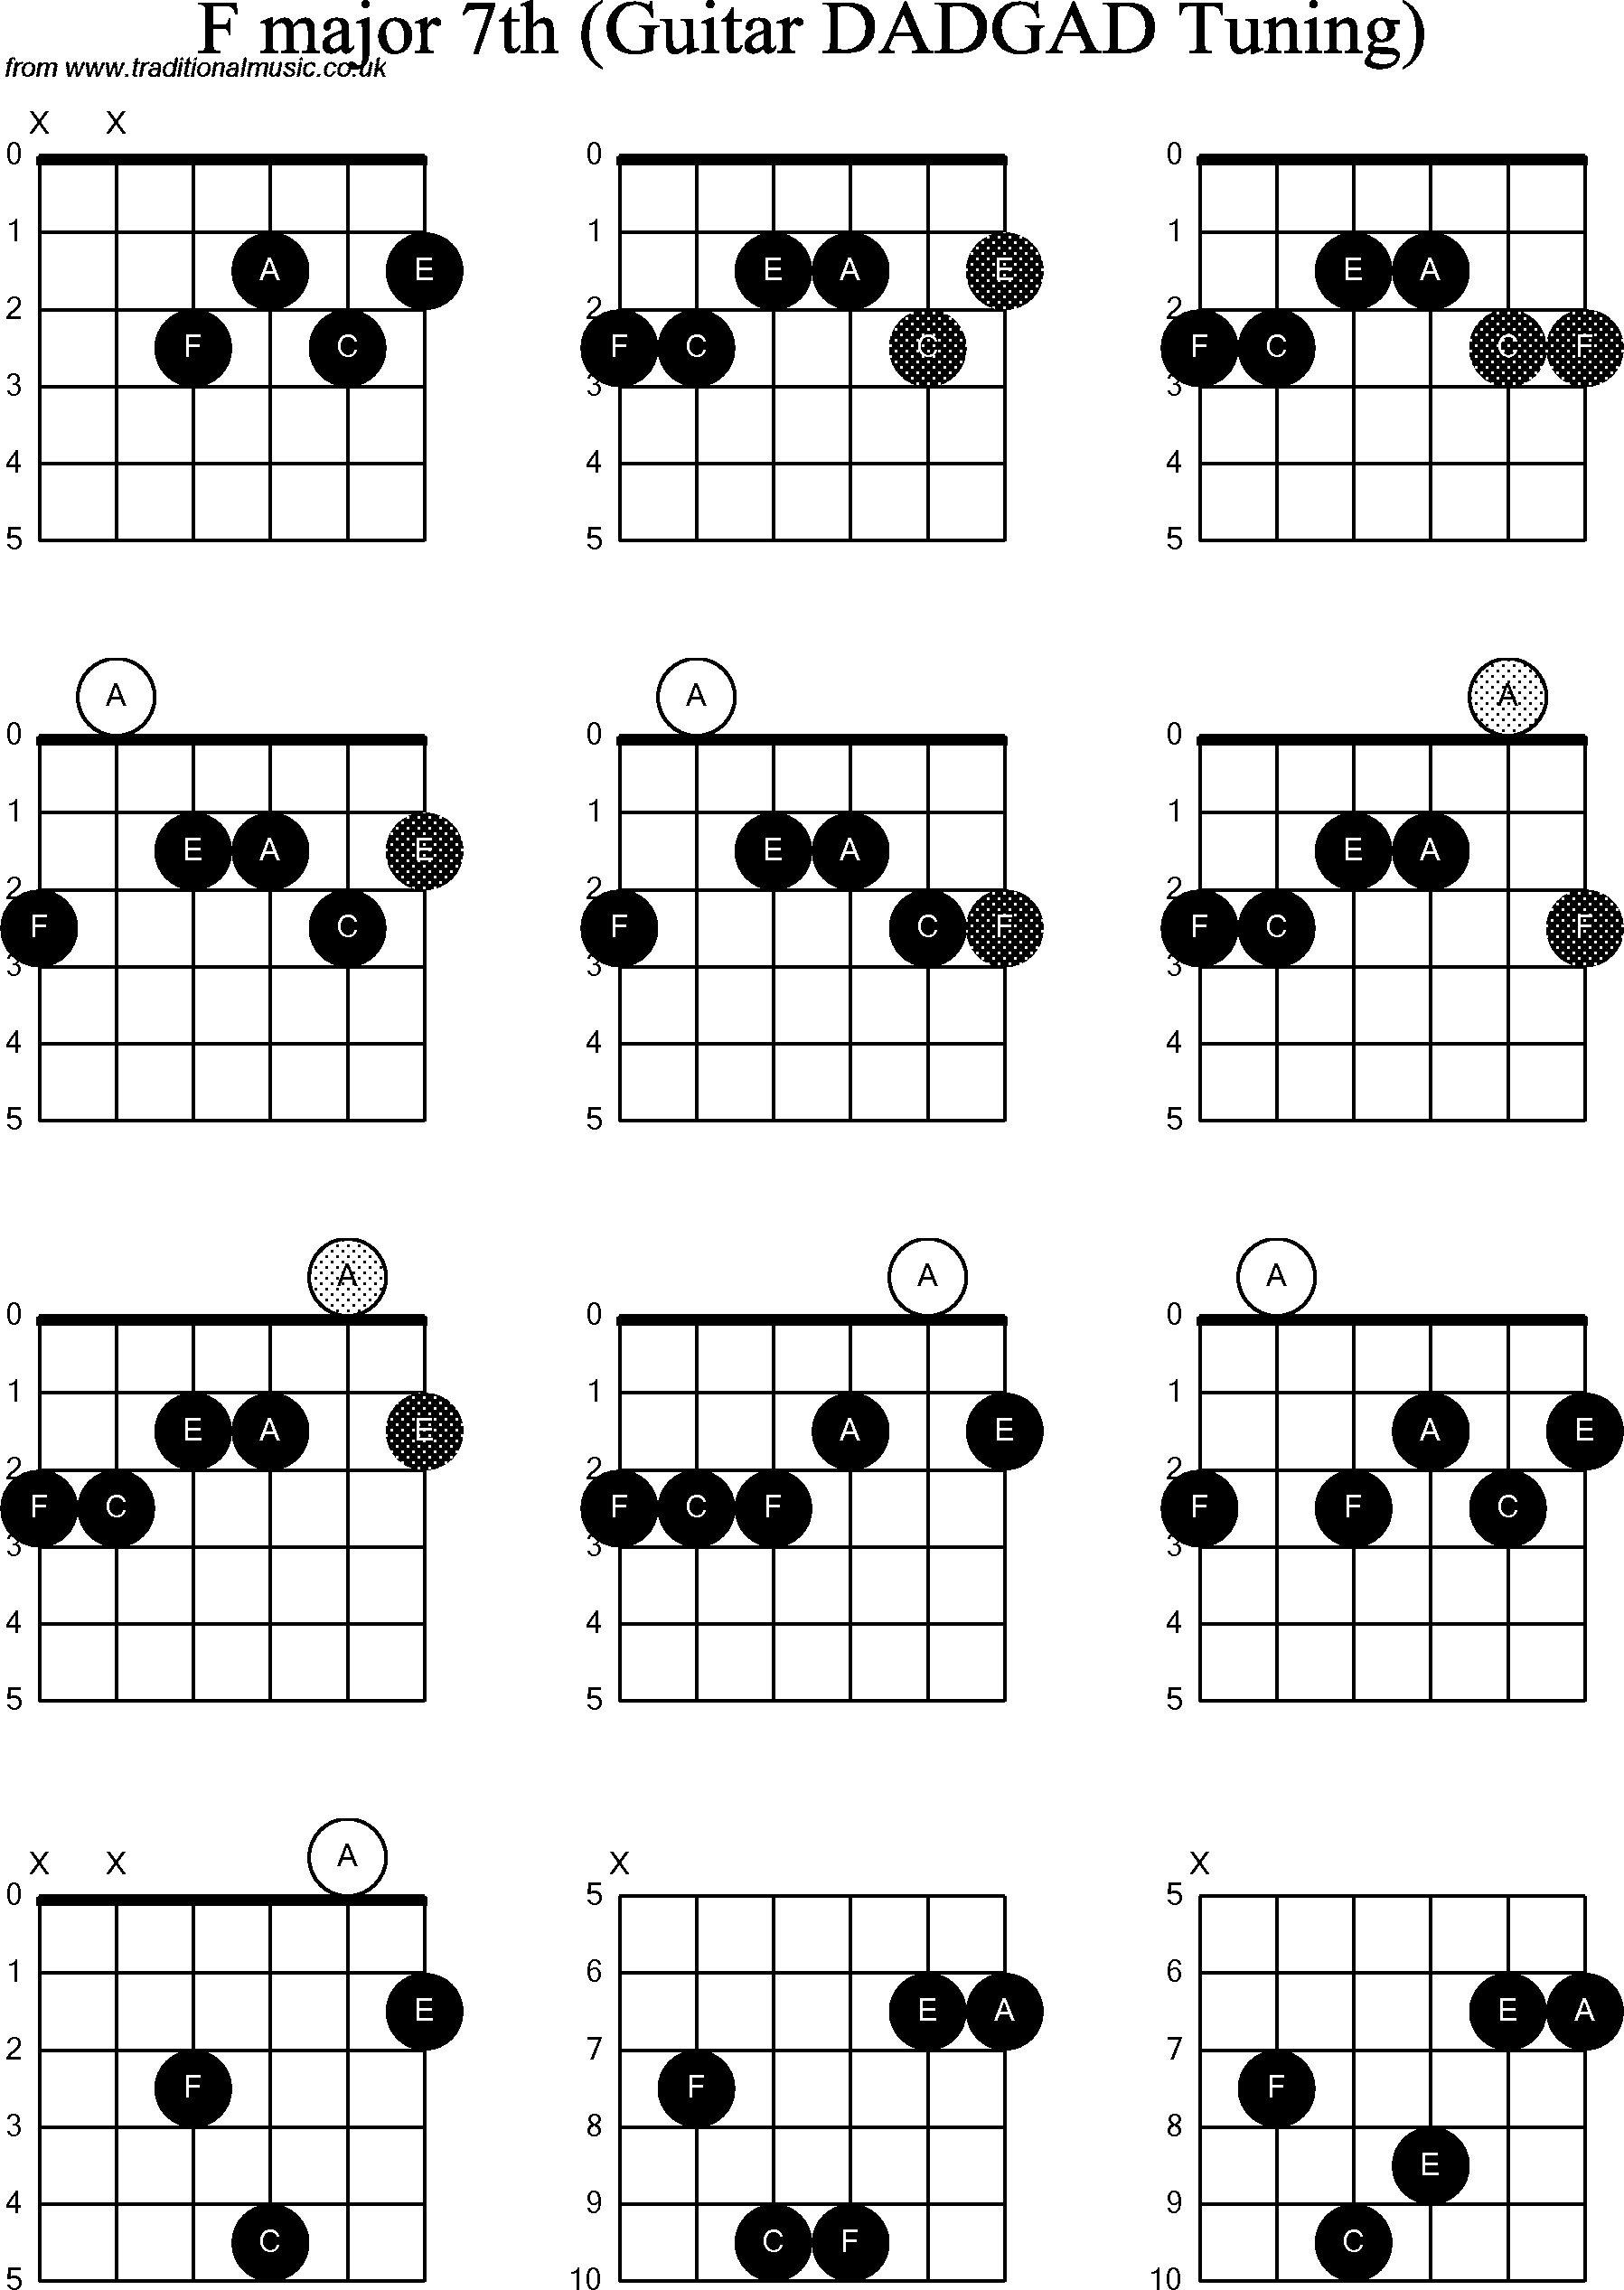 Chord Diagrams for D Modal Guitar(DADGAD), F Major7th